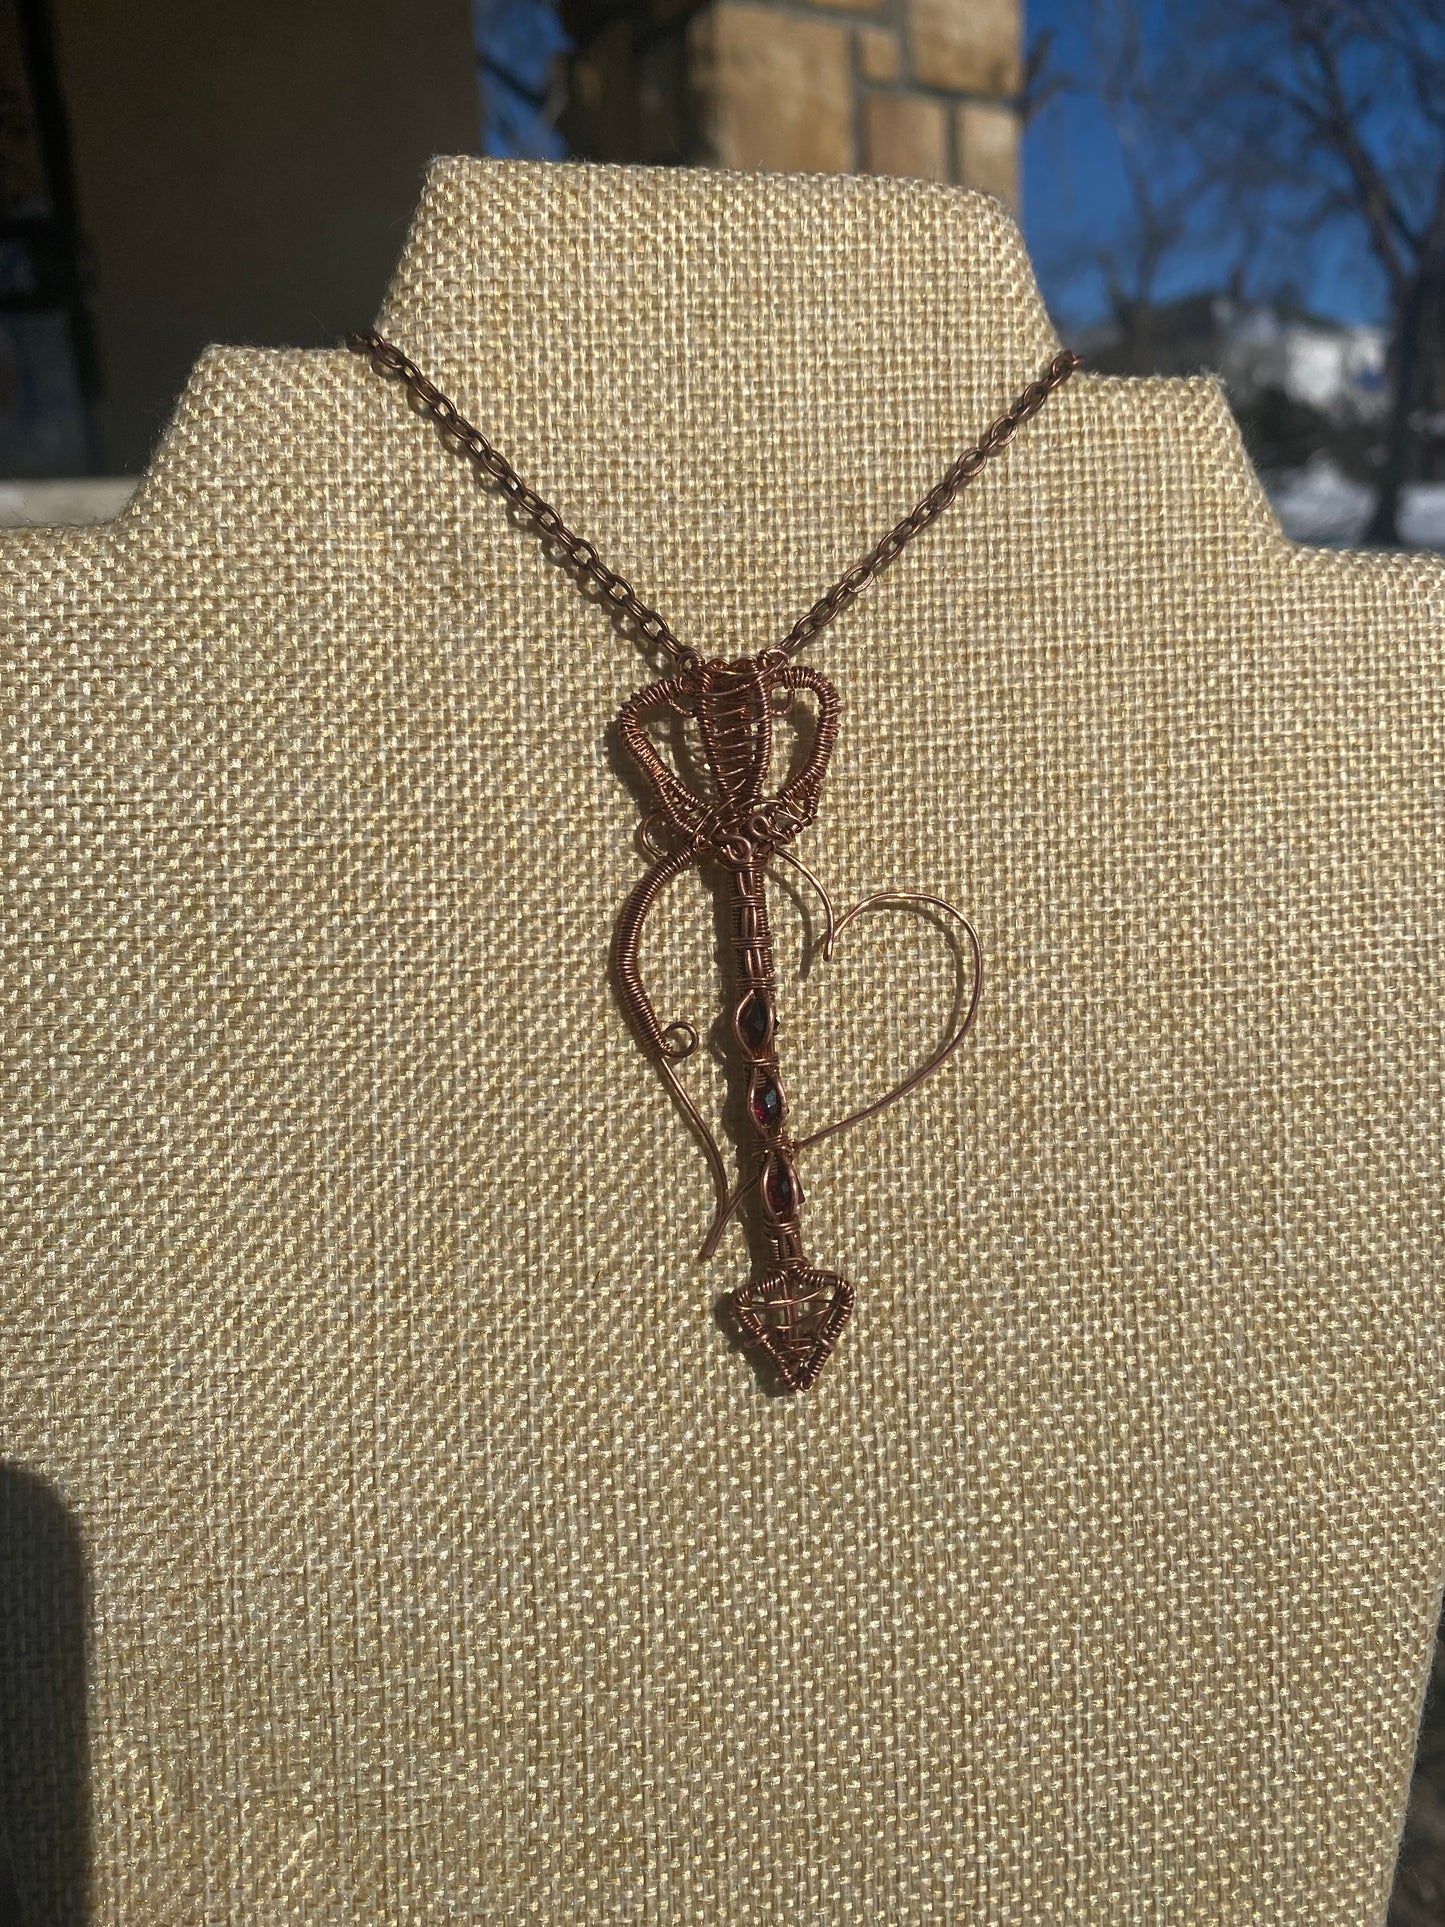 Eternal Love: Heart-Shaped Rhodolite Garnet Necklace with Cupid's Arrow